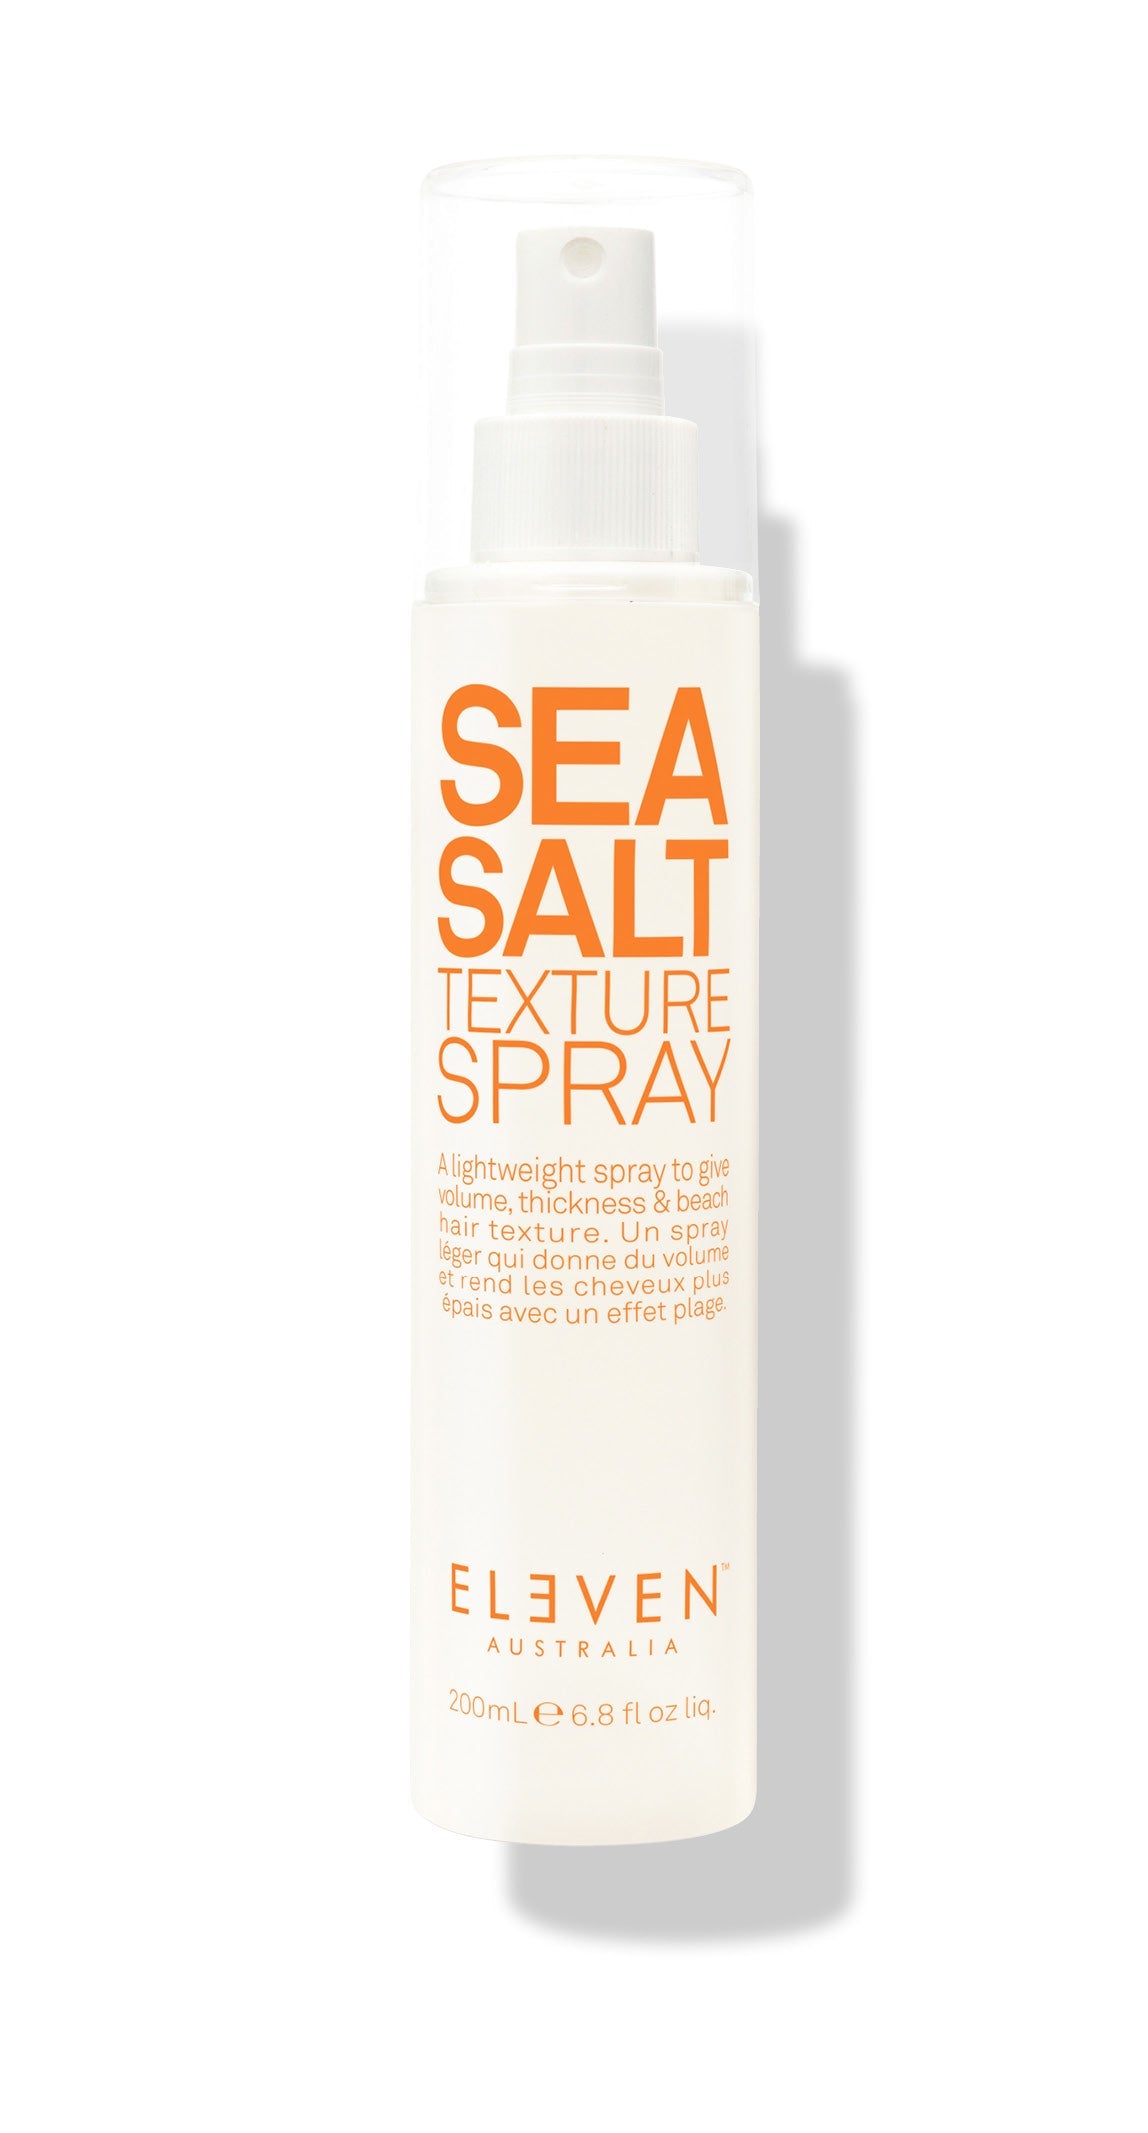 SEA SALT TEXTURE SPRAY 200ML